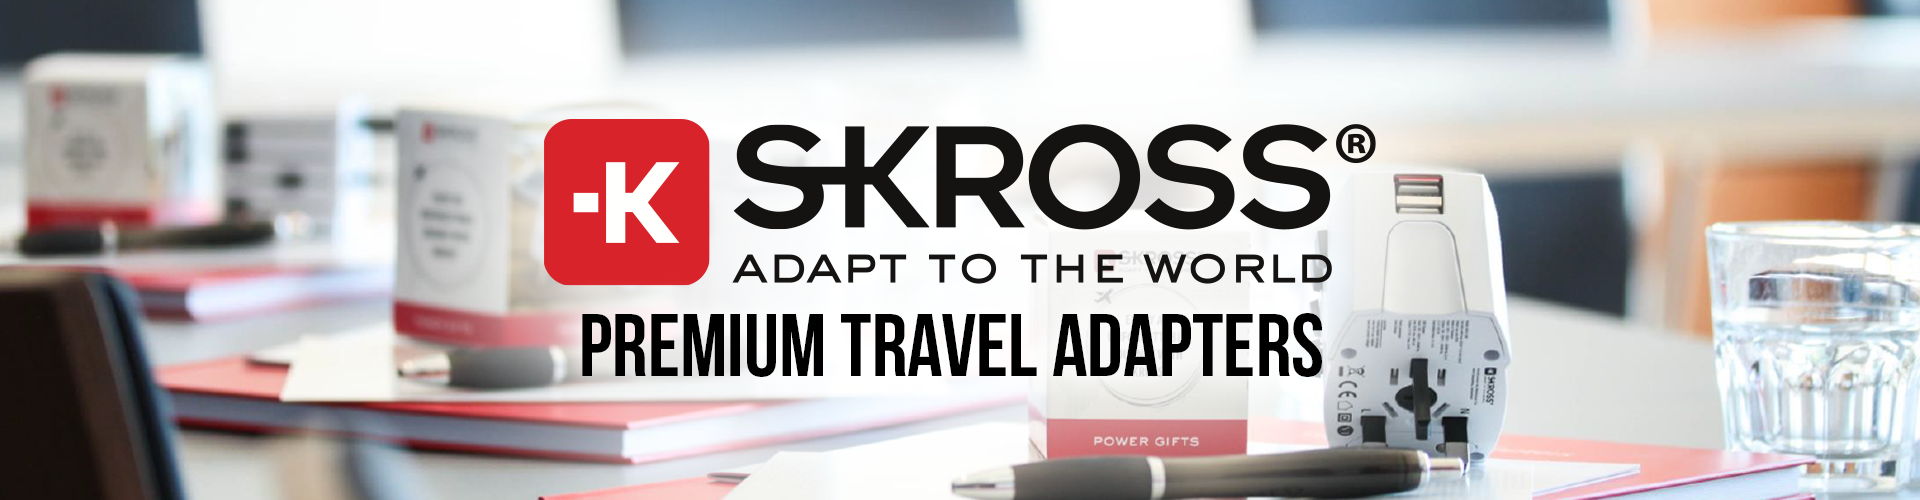 Skross-travel-adapters-banner